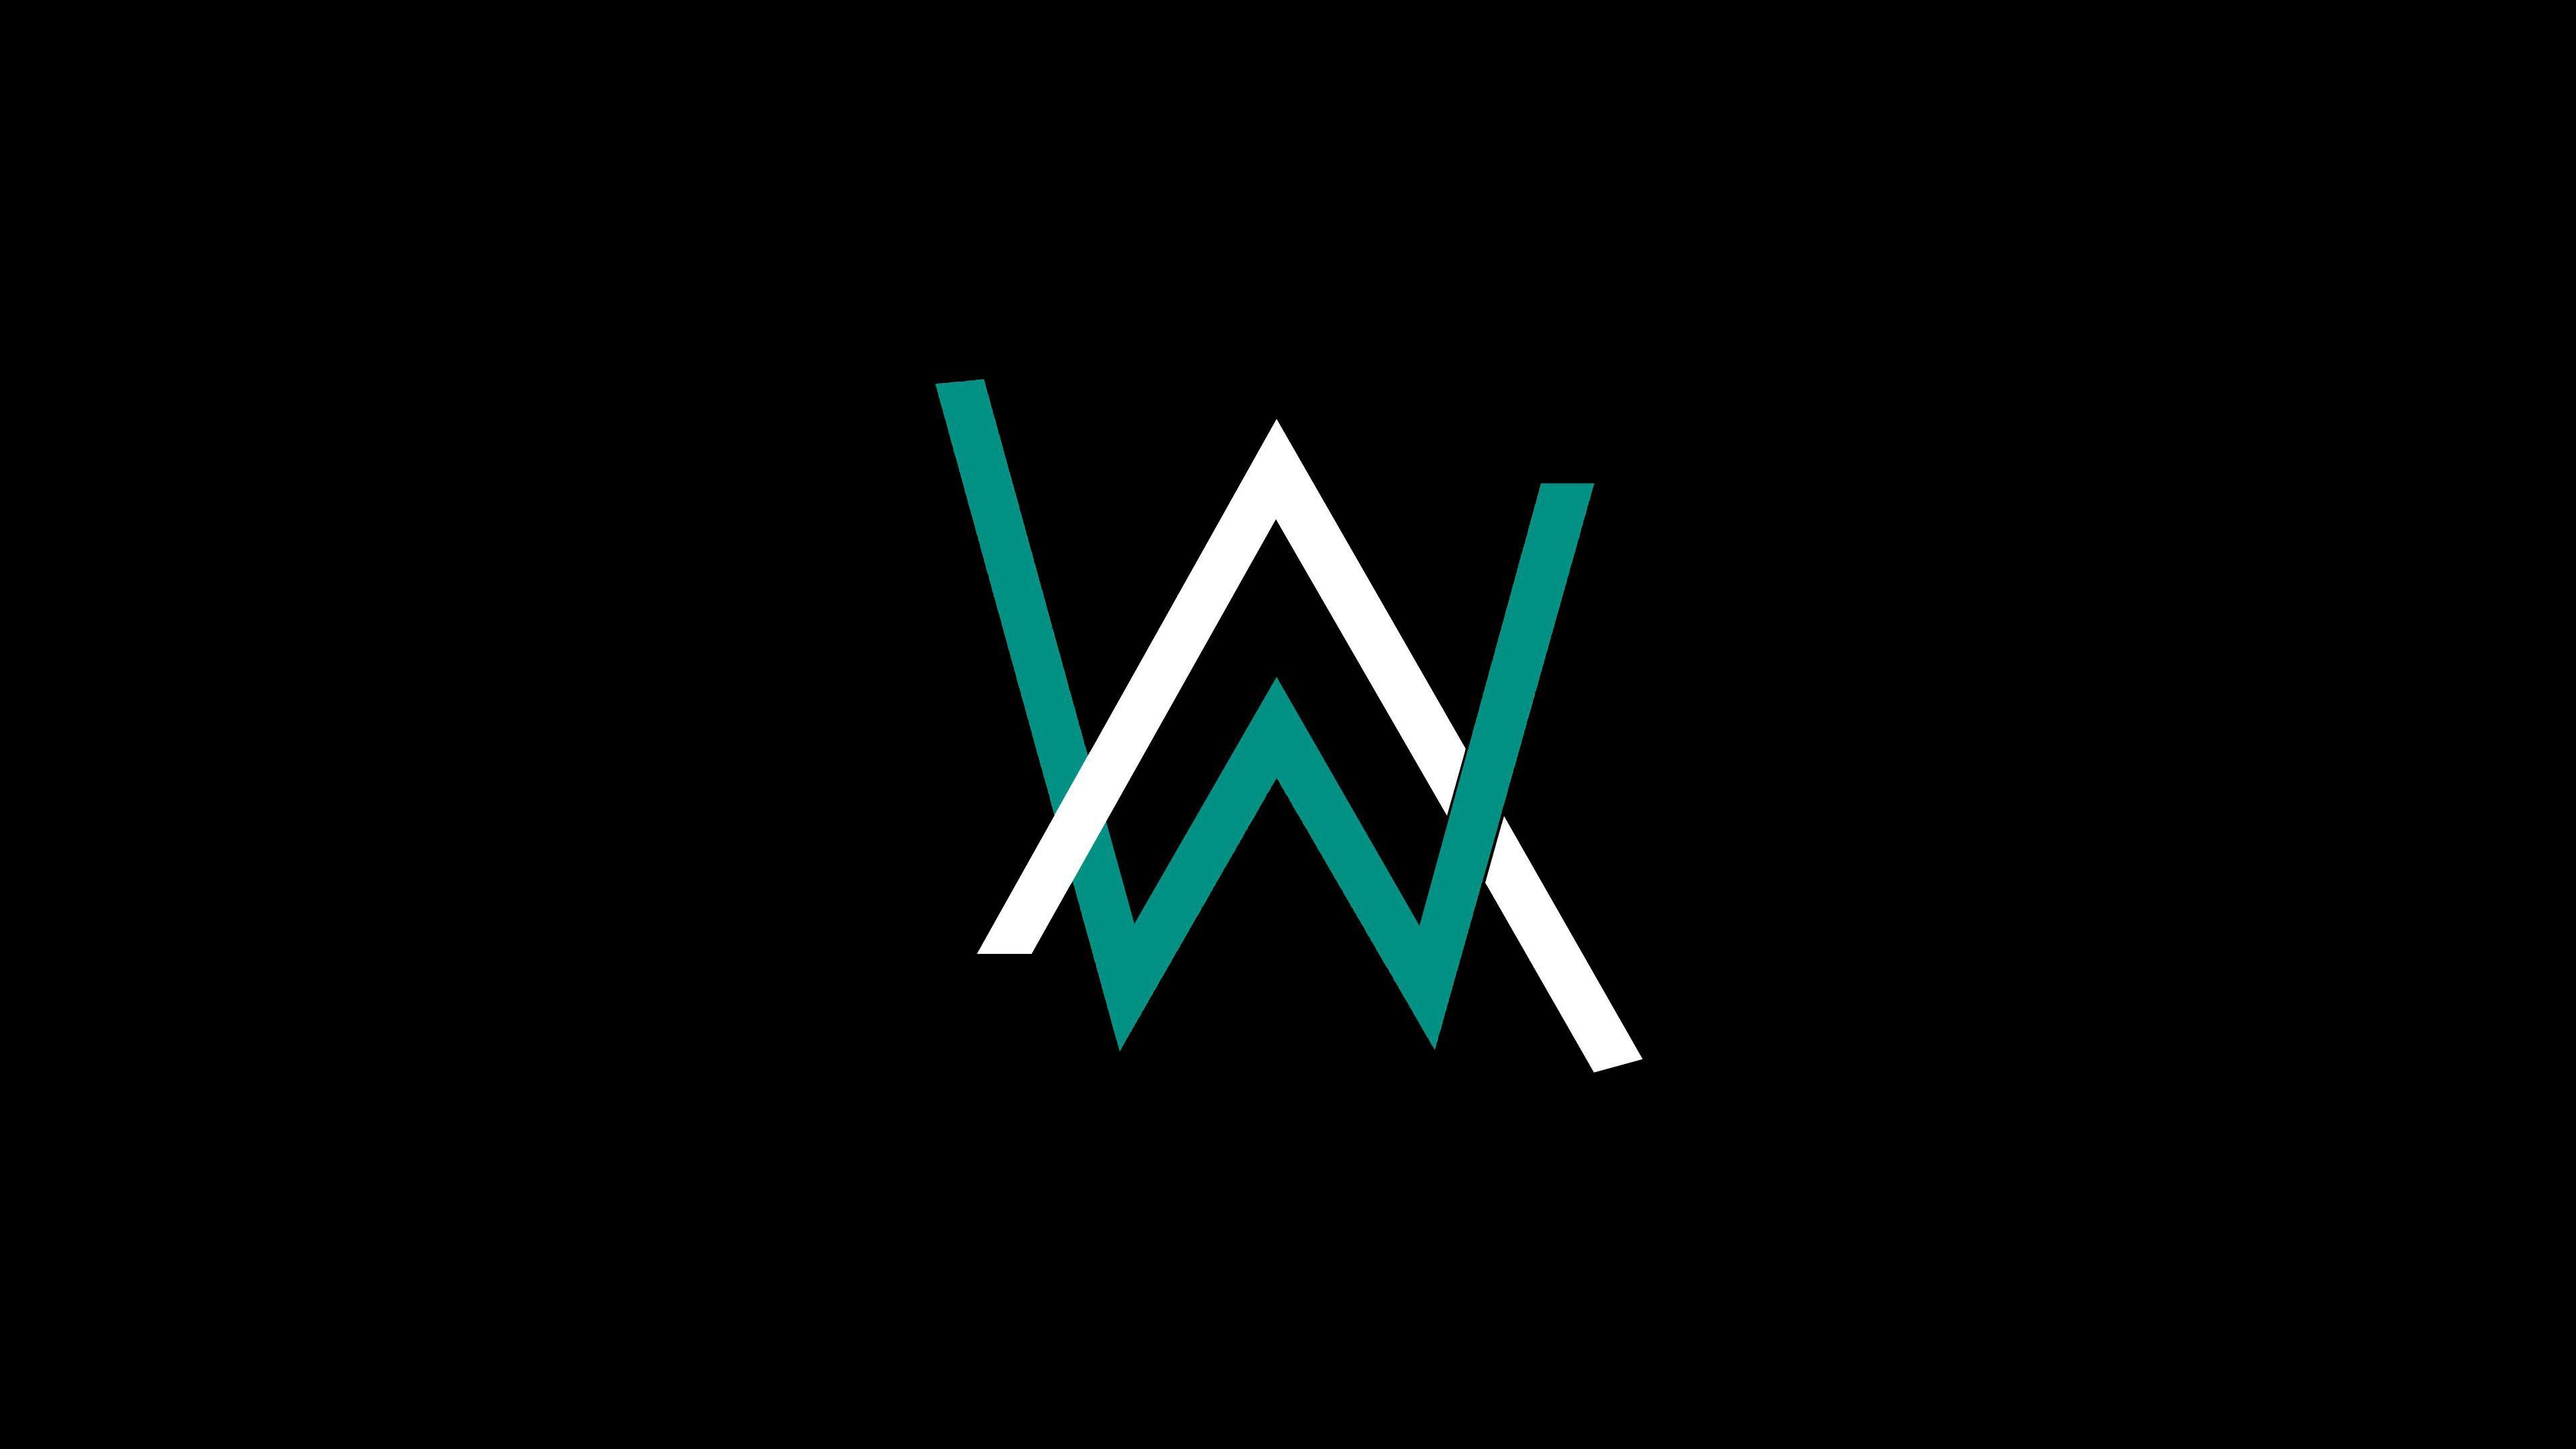 Alan Walker Logo Wallpapers - Wallpaper Cave